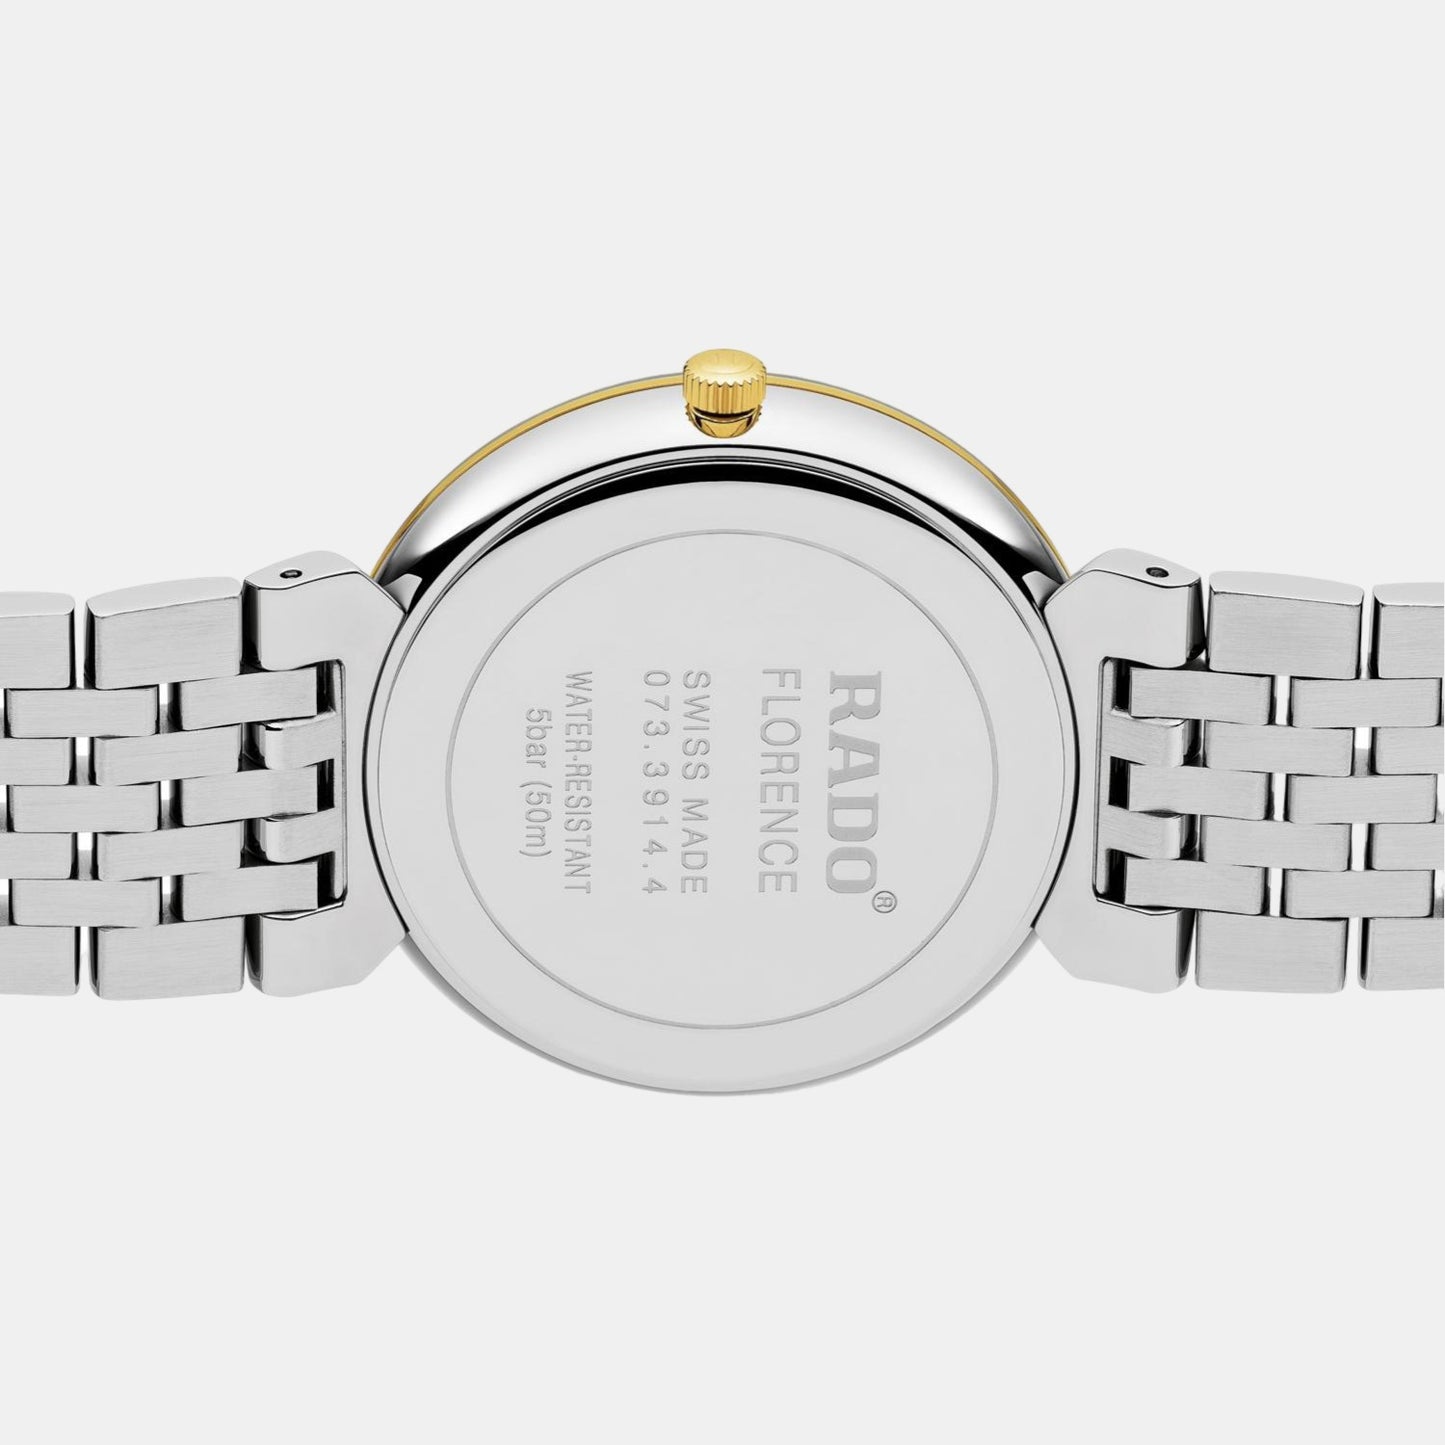 rado-stainless-steel-black-analog-unisex-watch-r48912703